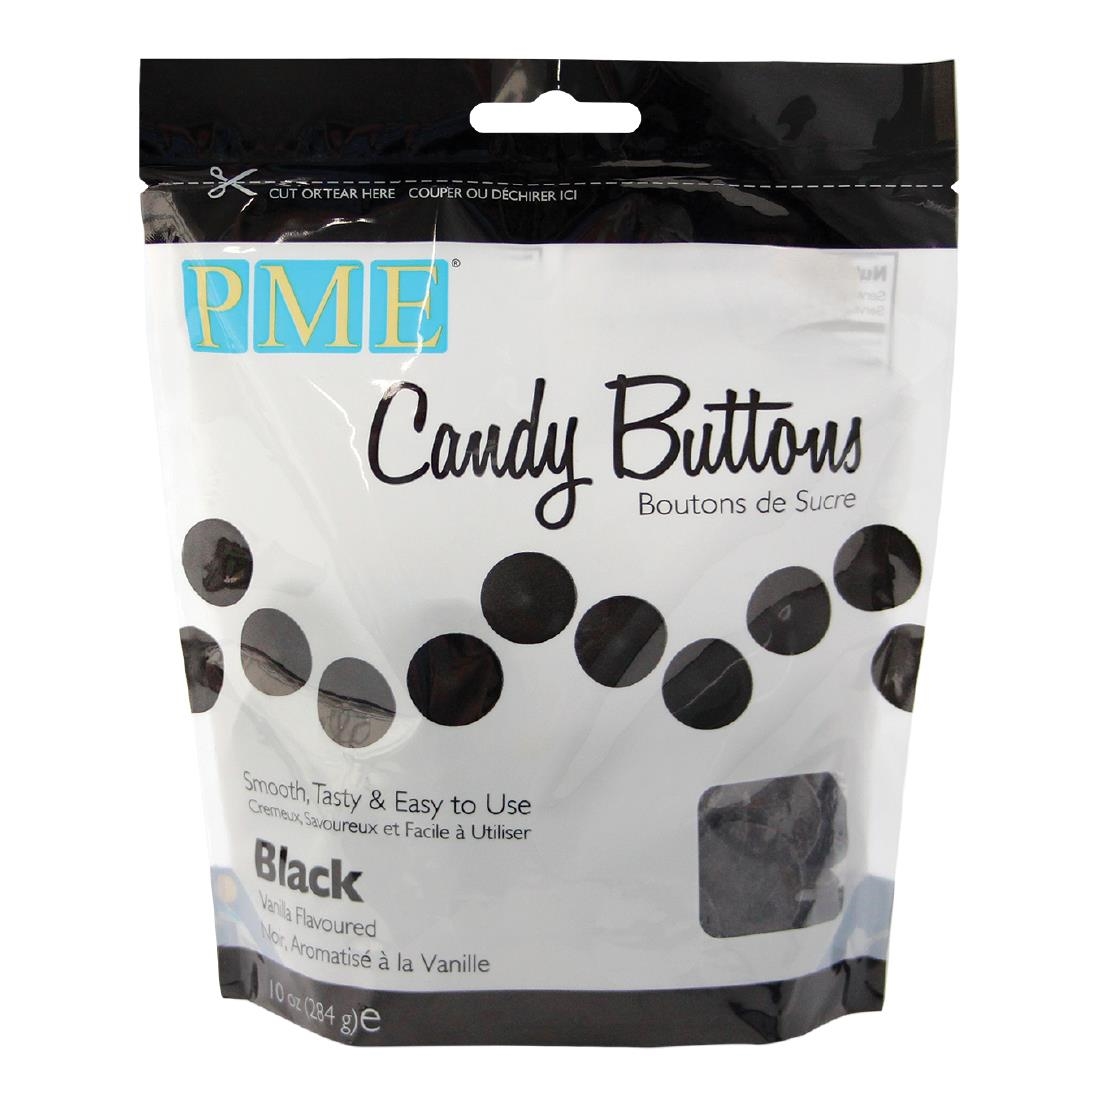 PME Candy Buttons Black 280g (HU349)